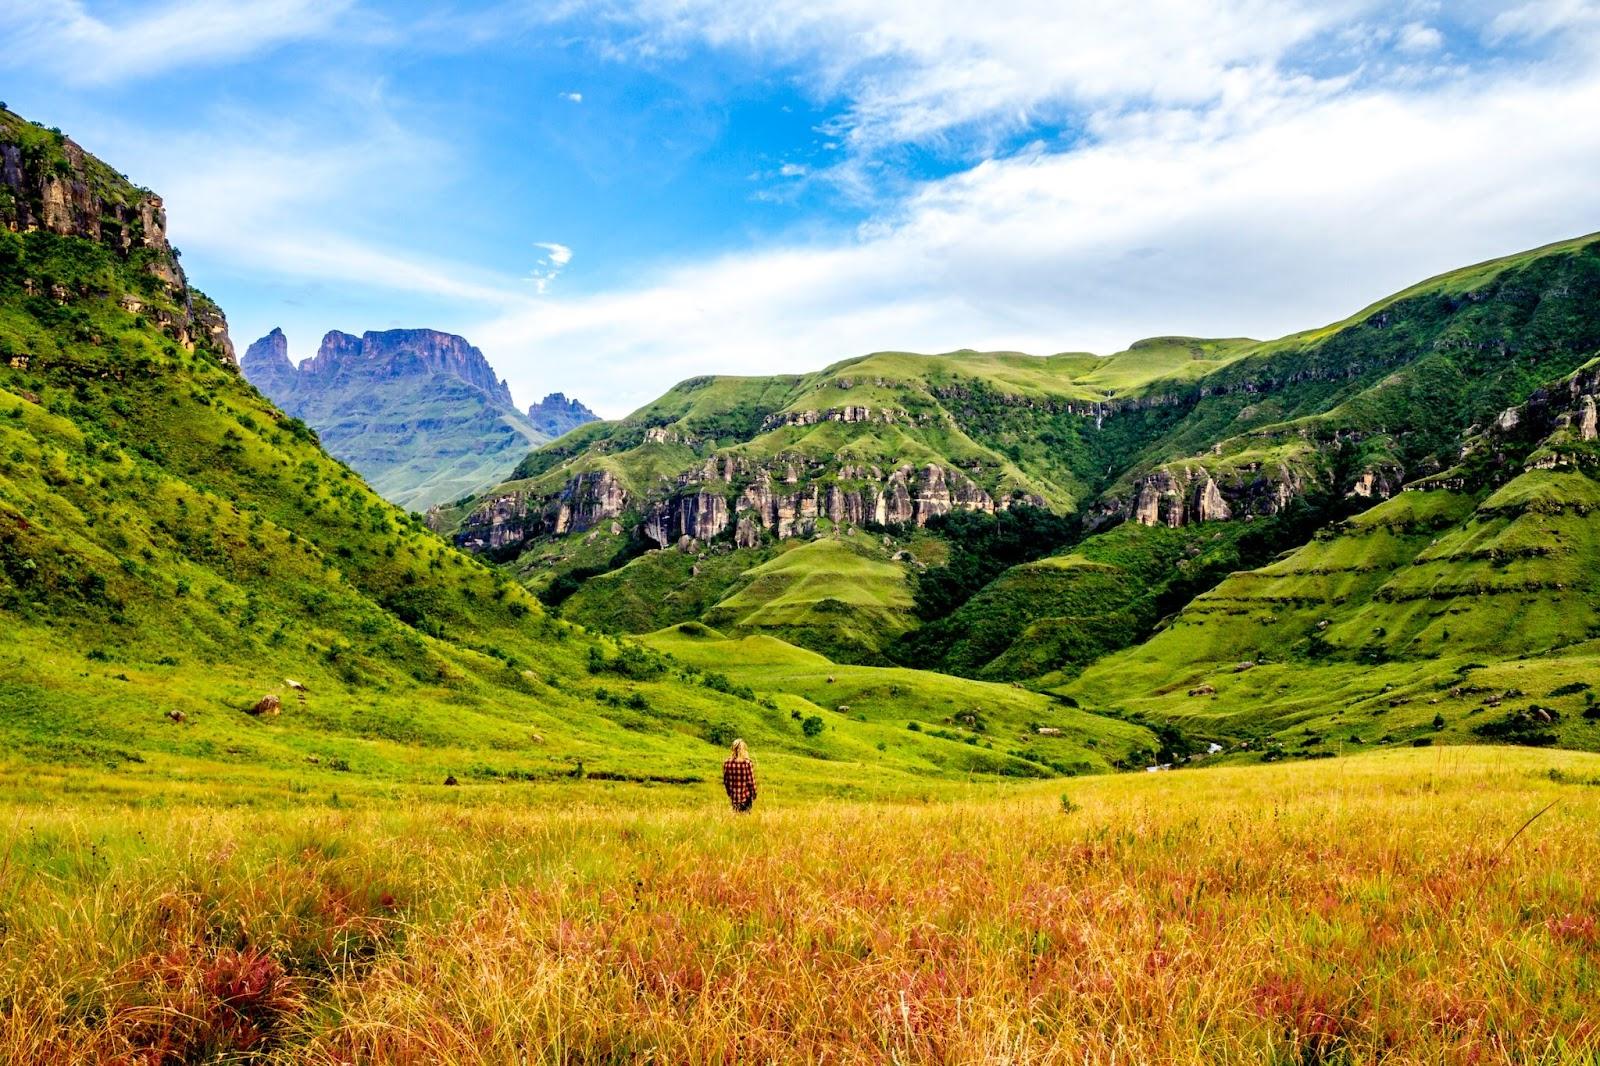 Drakensberg Mountain range in South Africa.